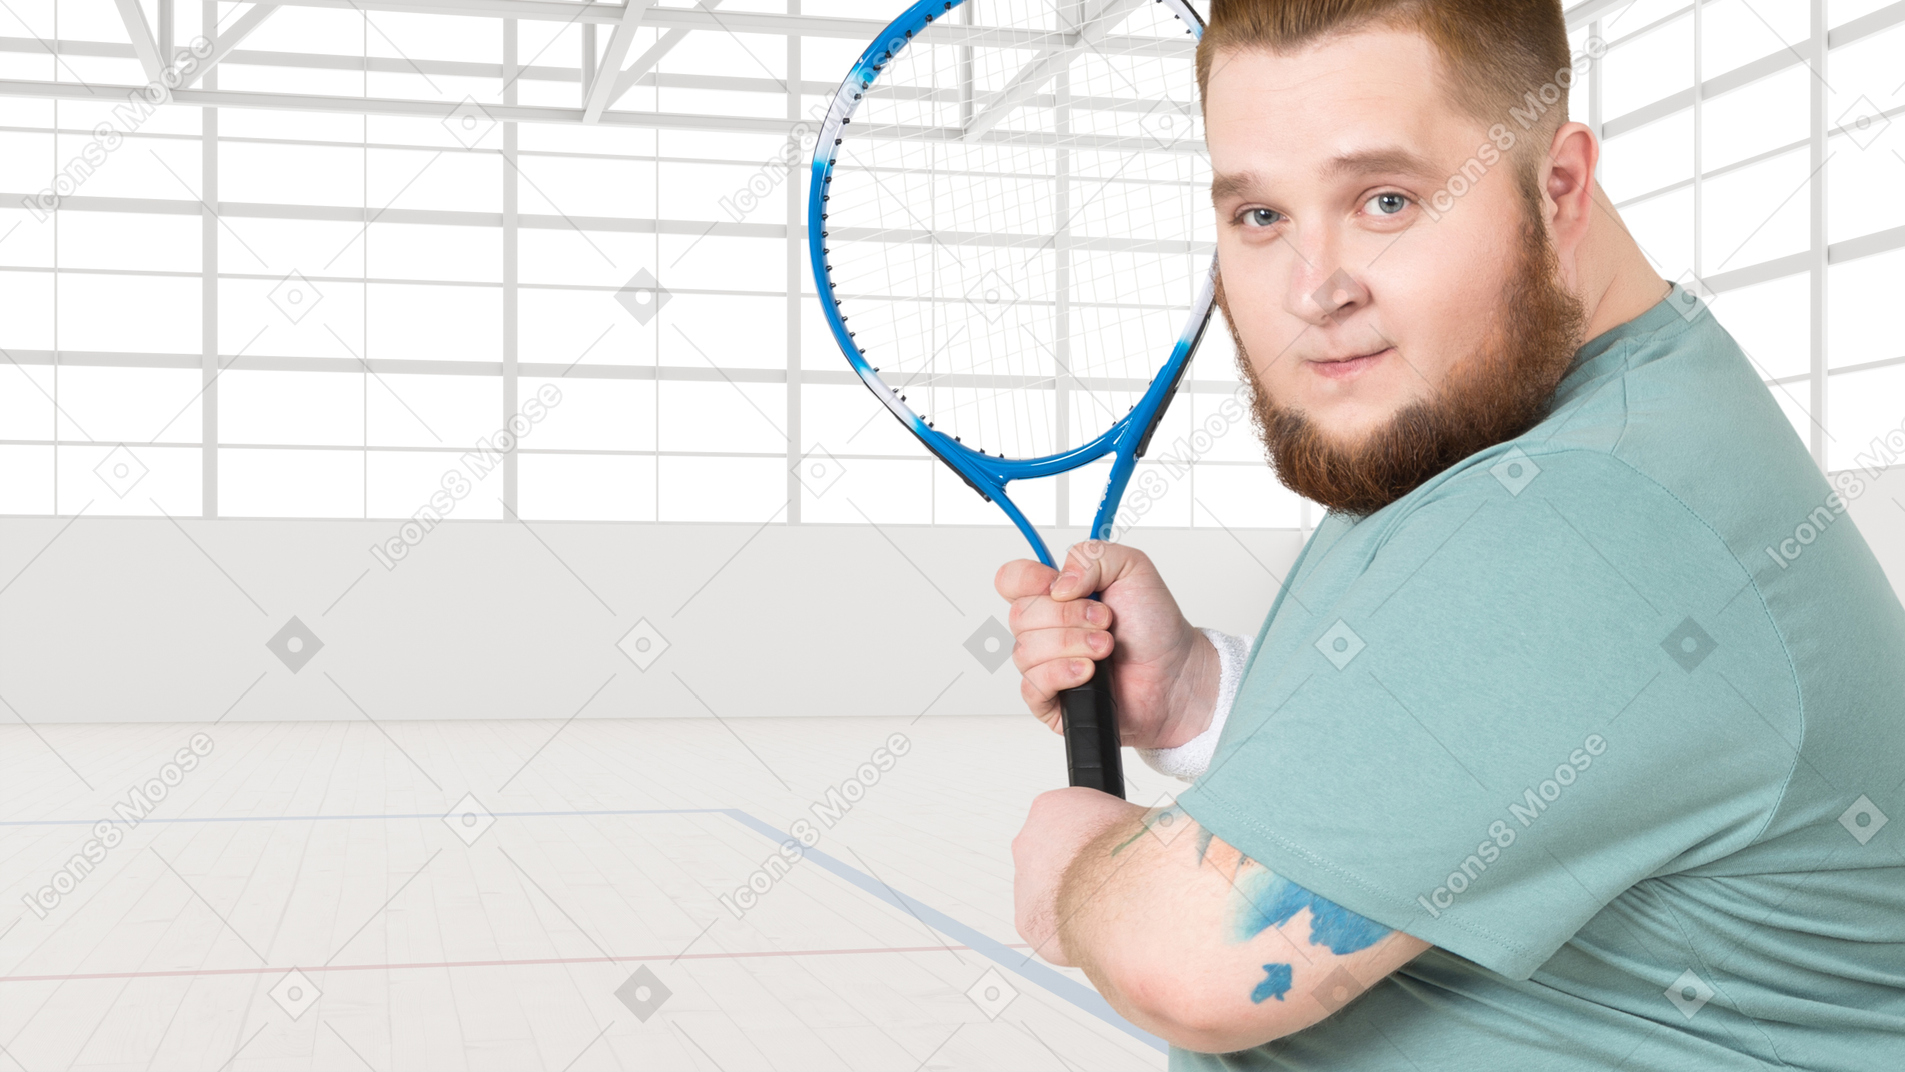 A man with a beard holding a tennis racket